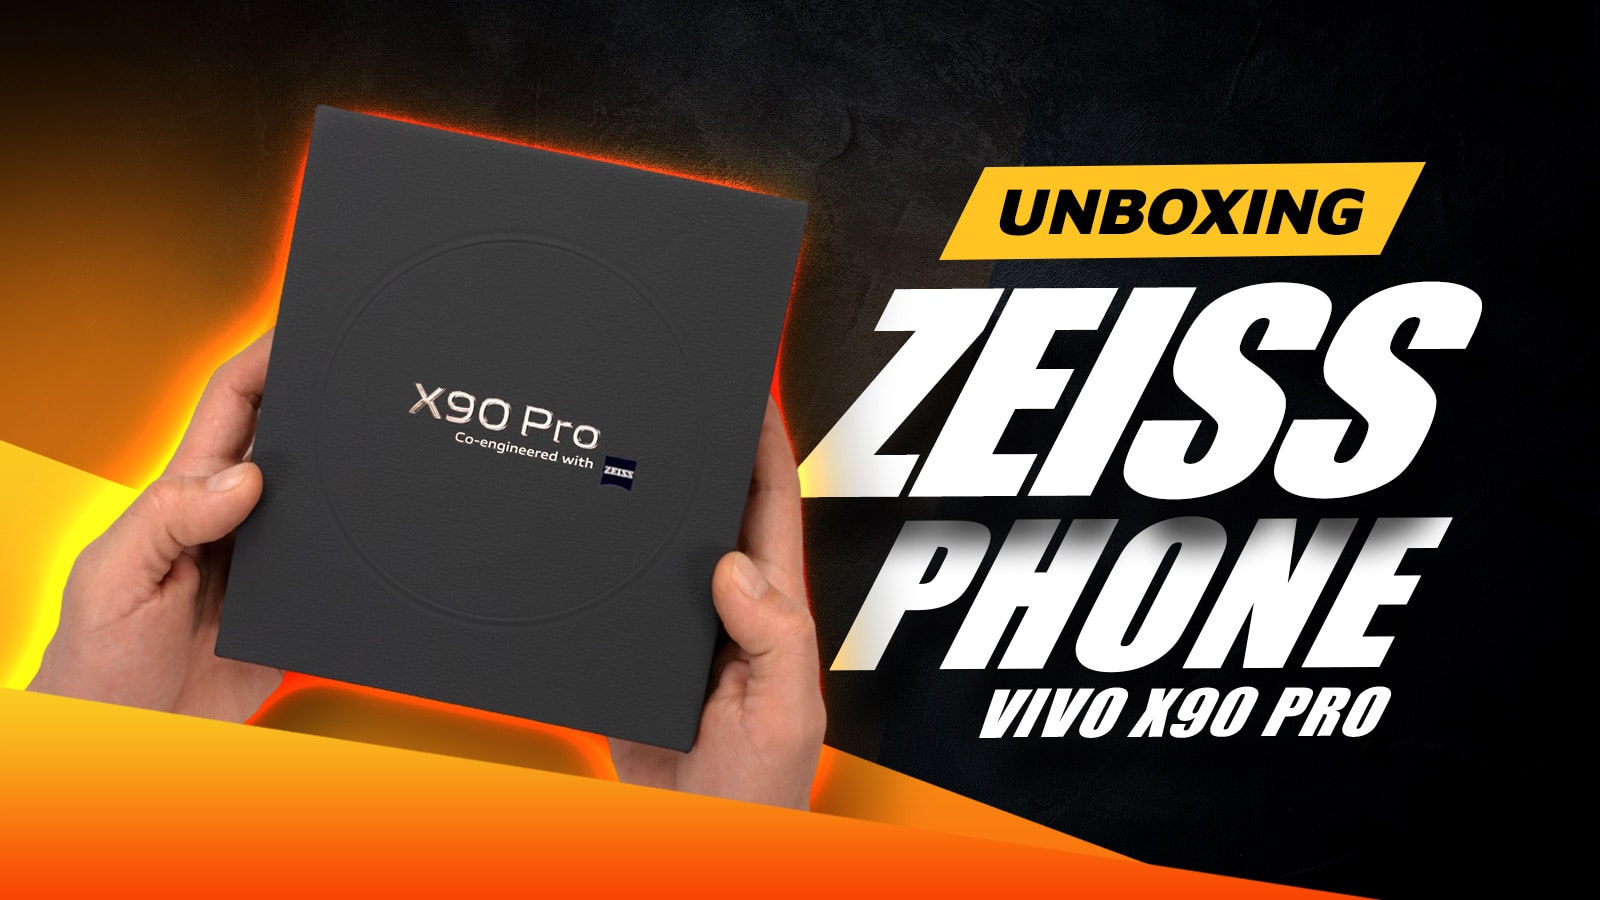 vivo X90 Pro unboxing Greek, vivo X90 Pro: Unboxing στο ZEISS Phone